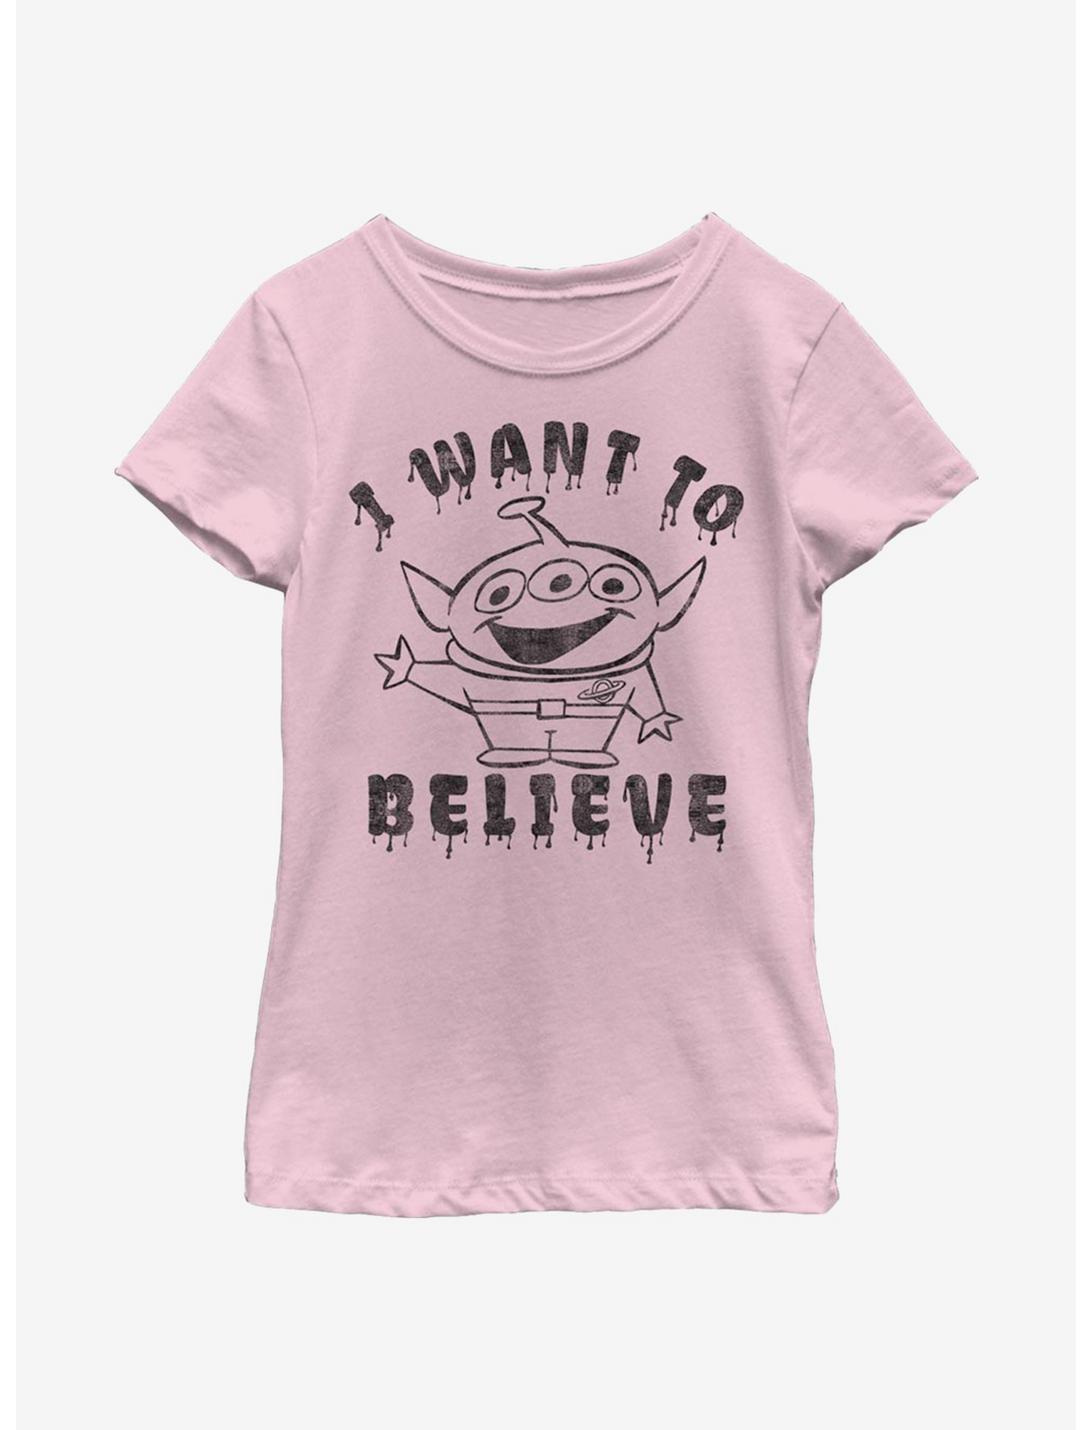 Disney Pixar Toy Story Aliens Believe Youth Girls T-Shirt, PINK, hi-res